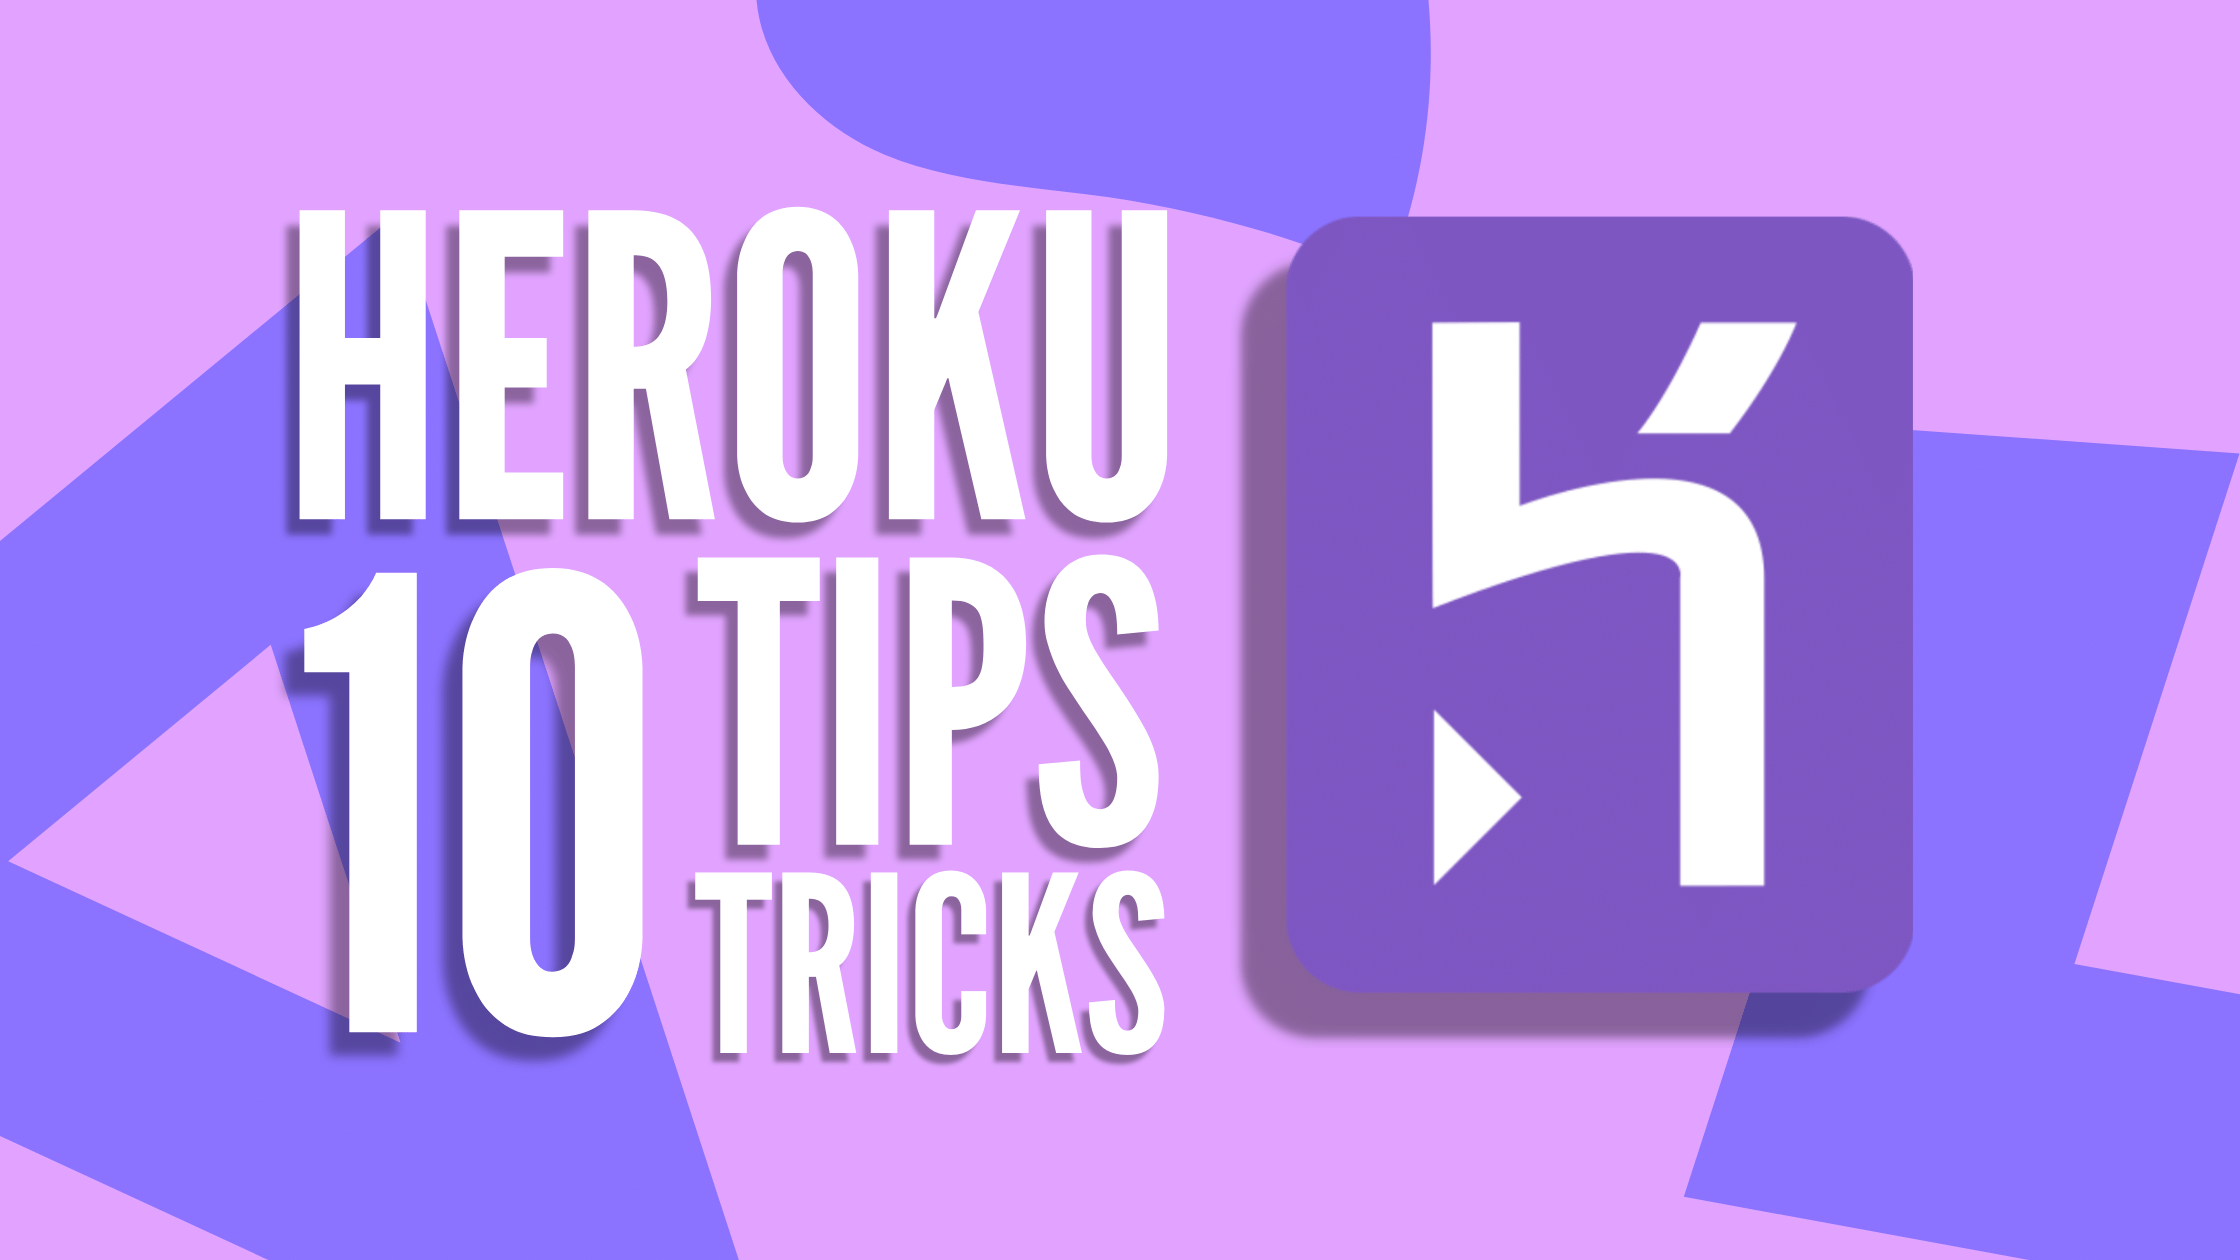 Our 10 Heroku Tips & Tricks